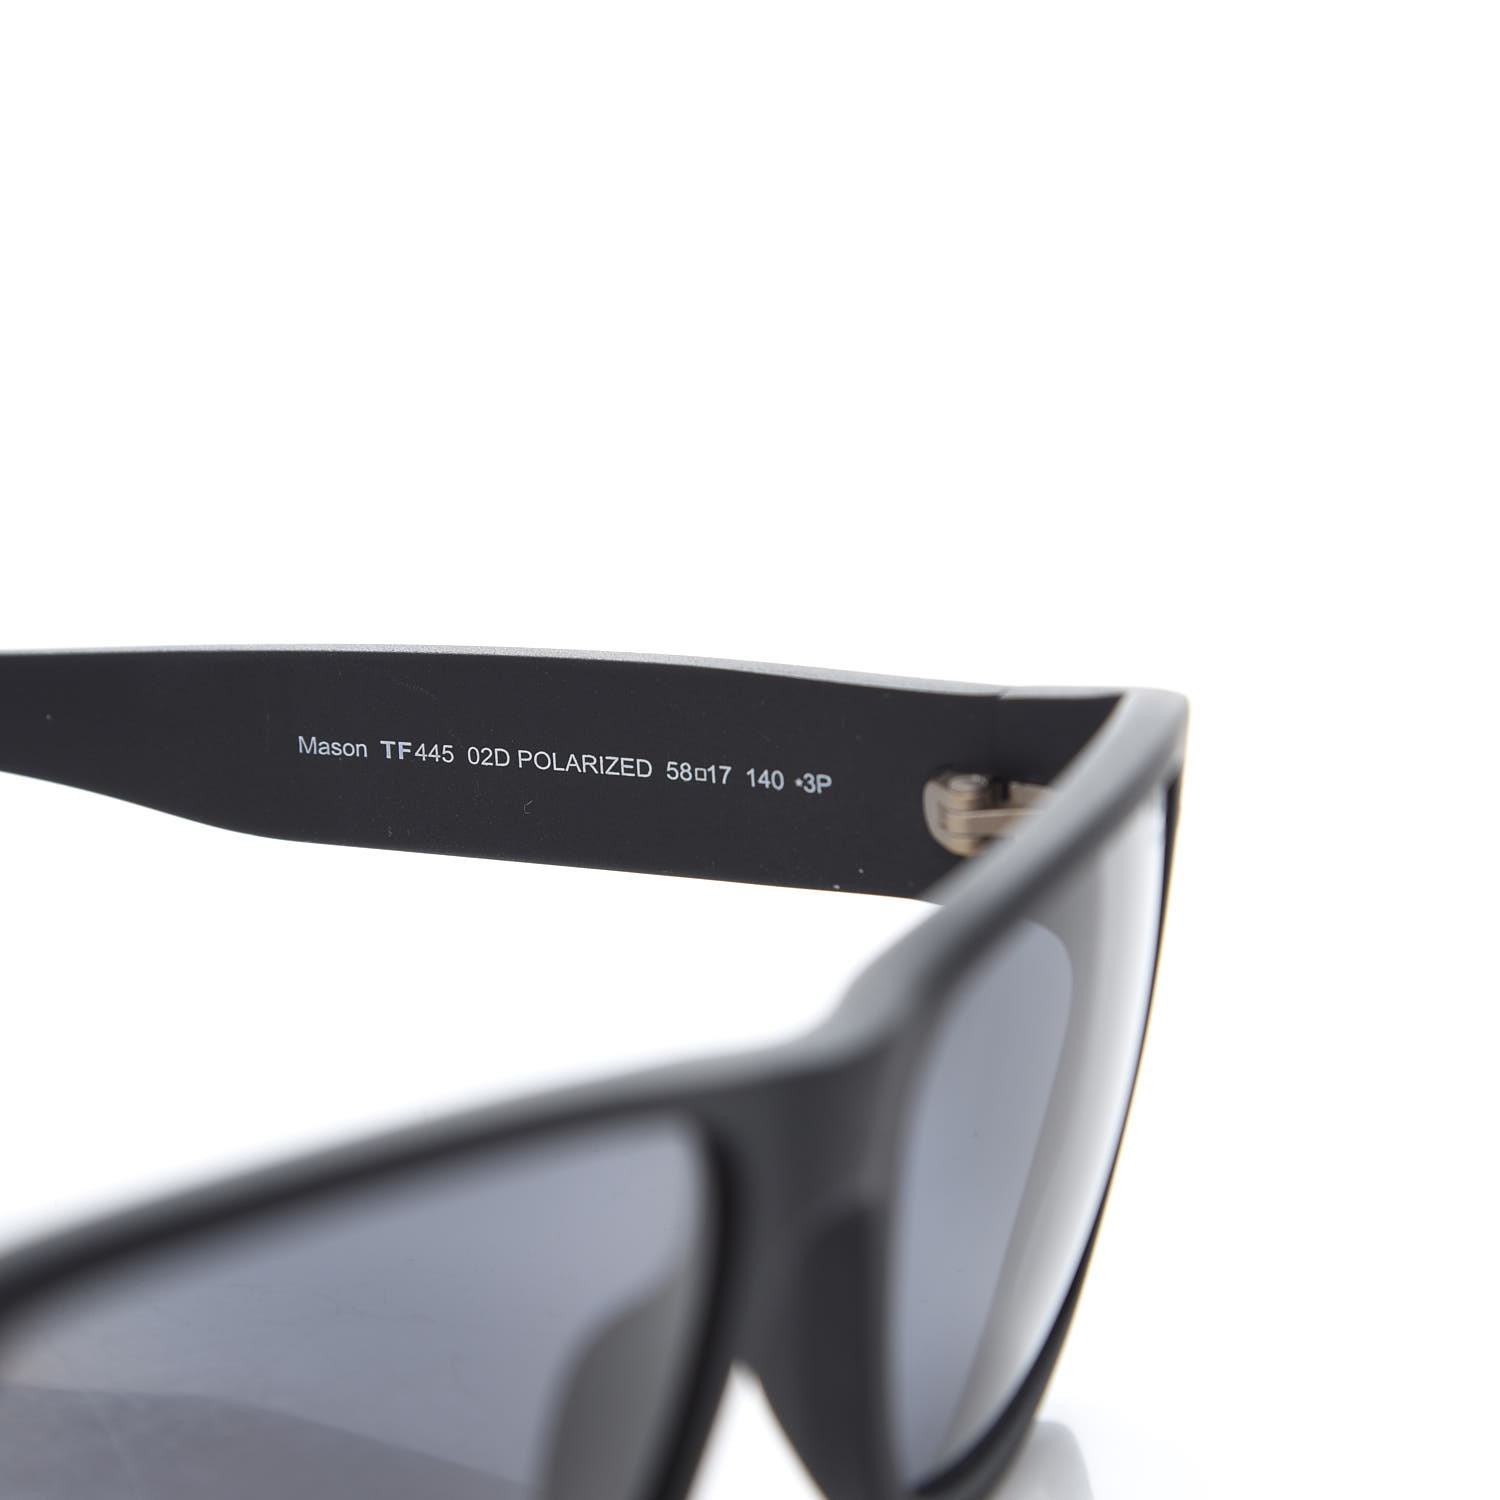 TOM FORD Polarized Mason Sunglasses TF445 Black 326181